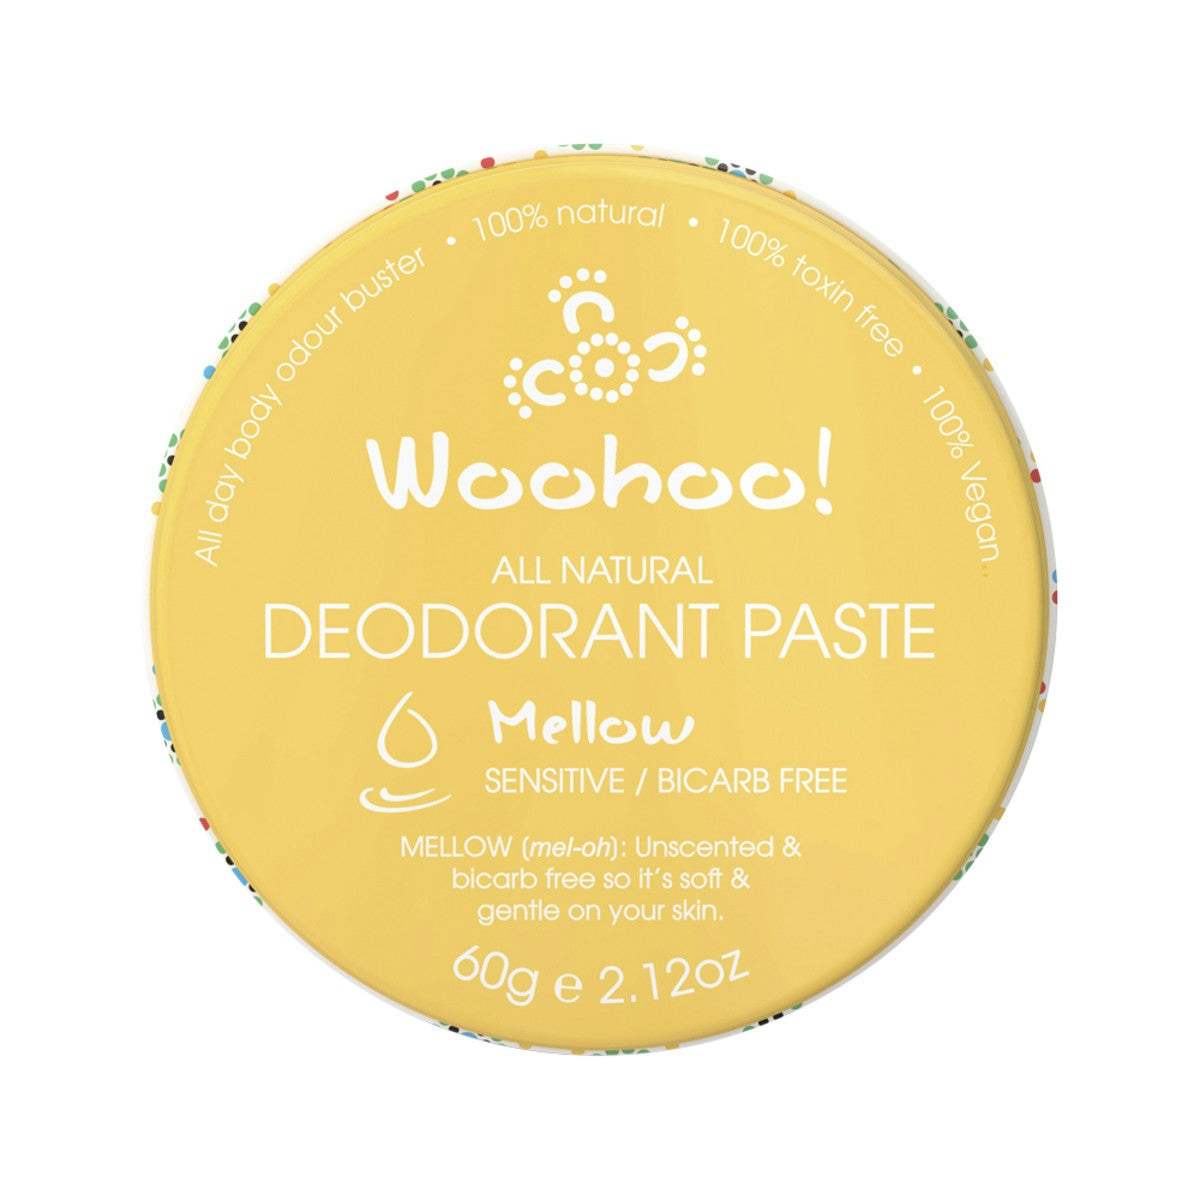 image of Woohoo Deodorant Paste Mellow (Sensitive) Tin 60g on white background